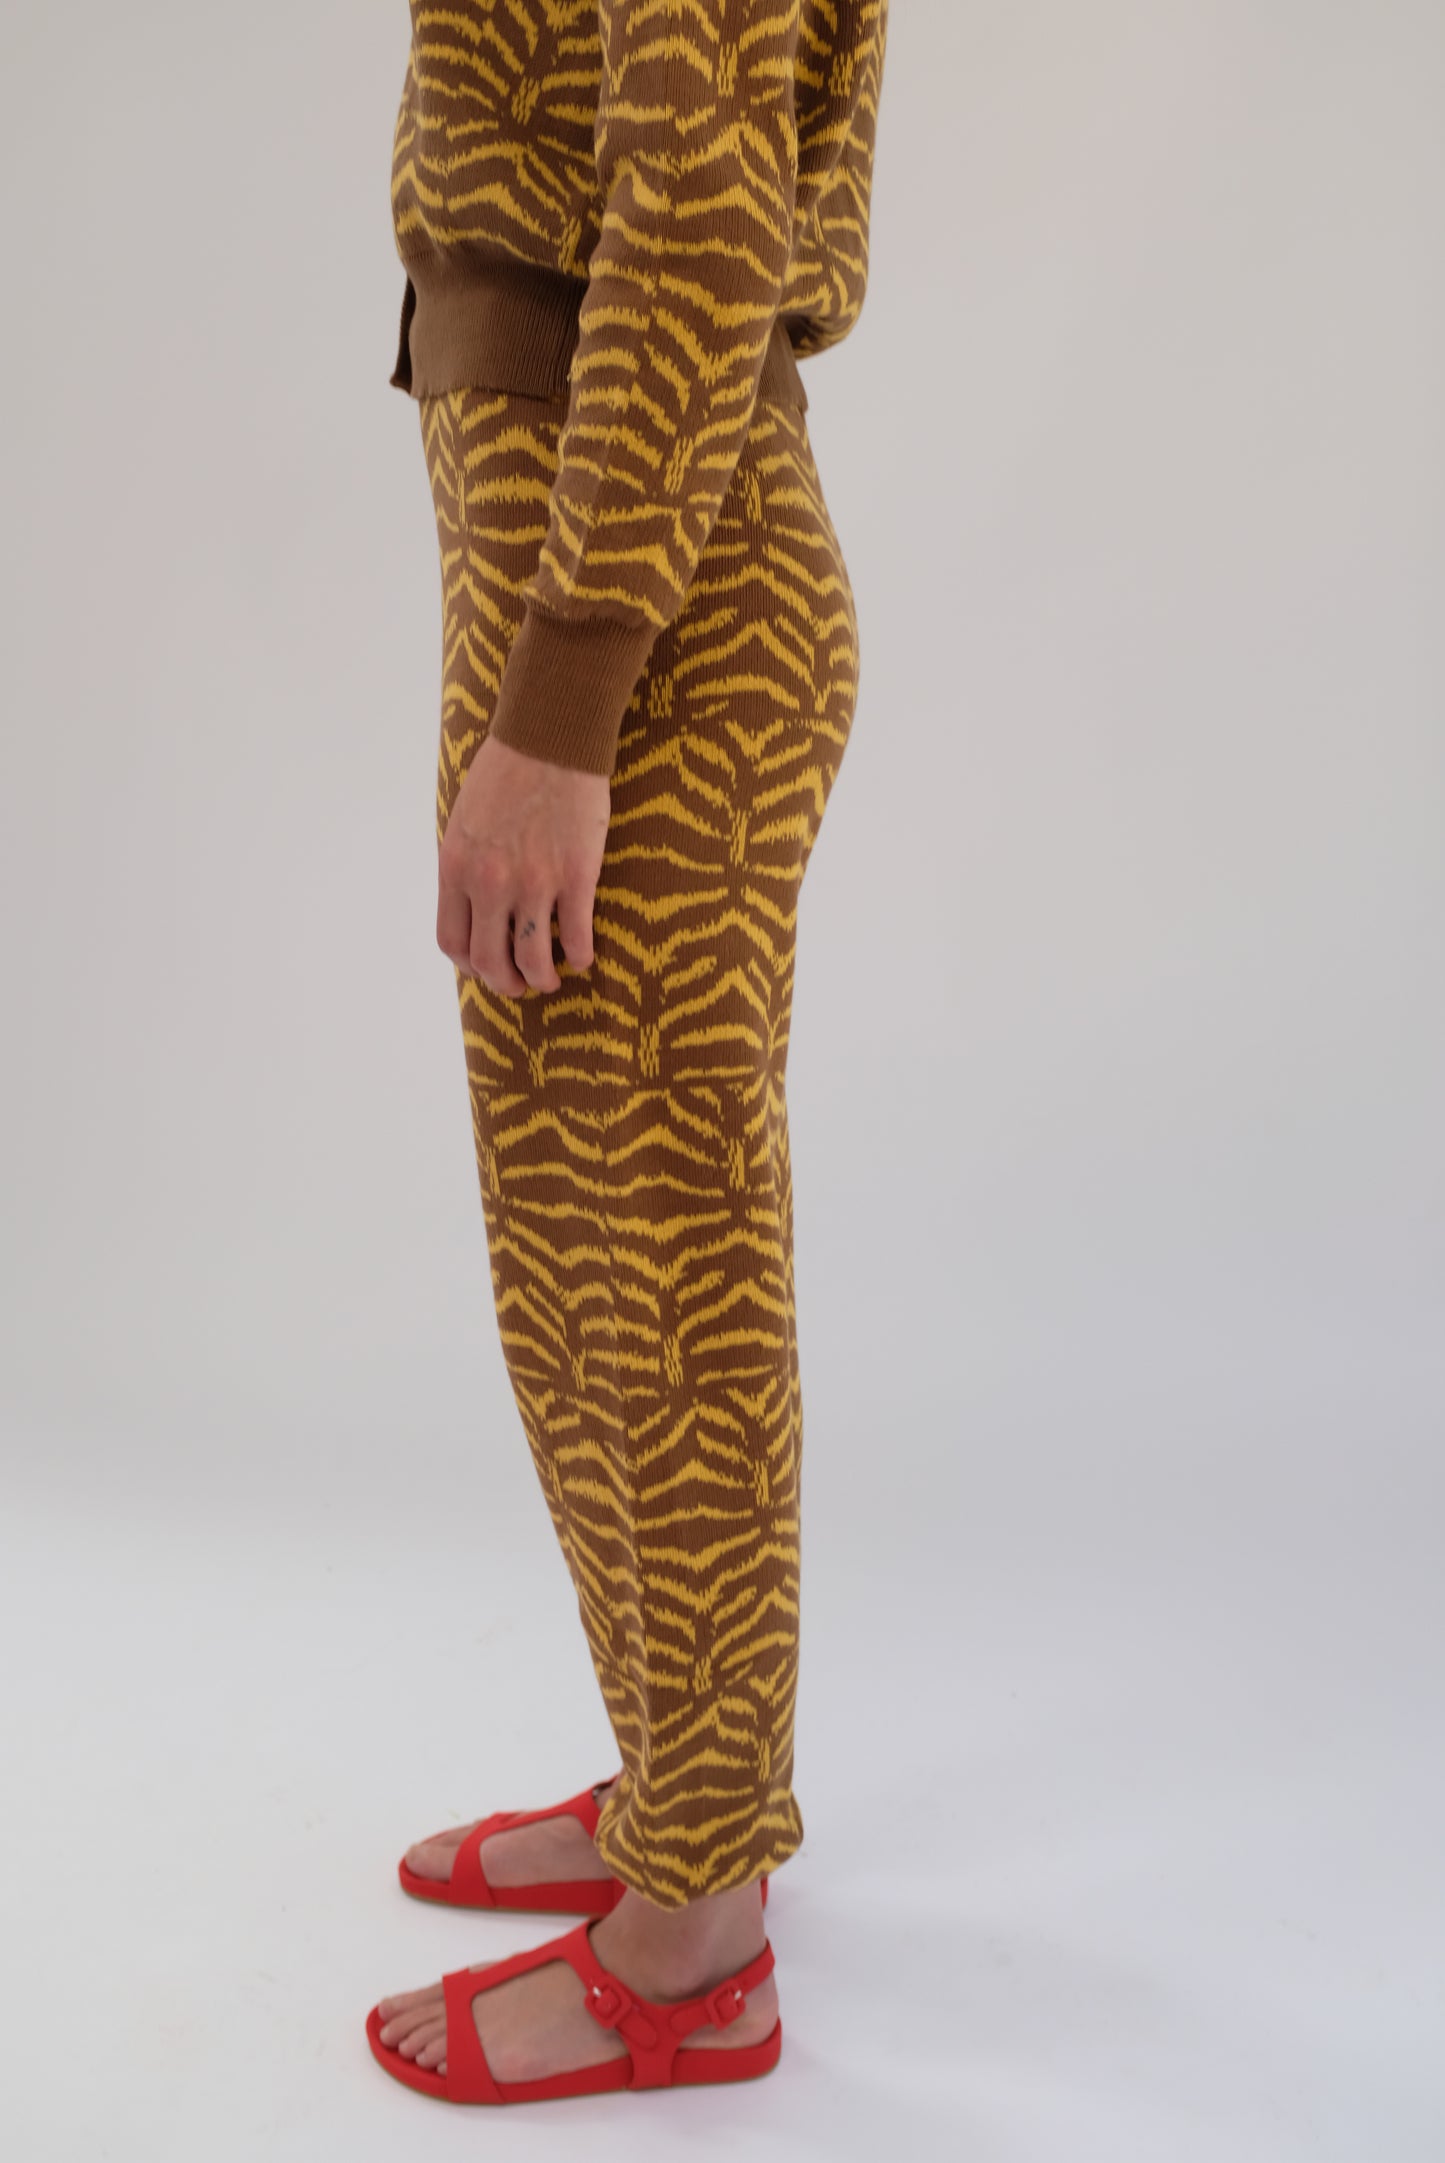 Beklina Jacquard Knit Pants Golden Tiger